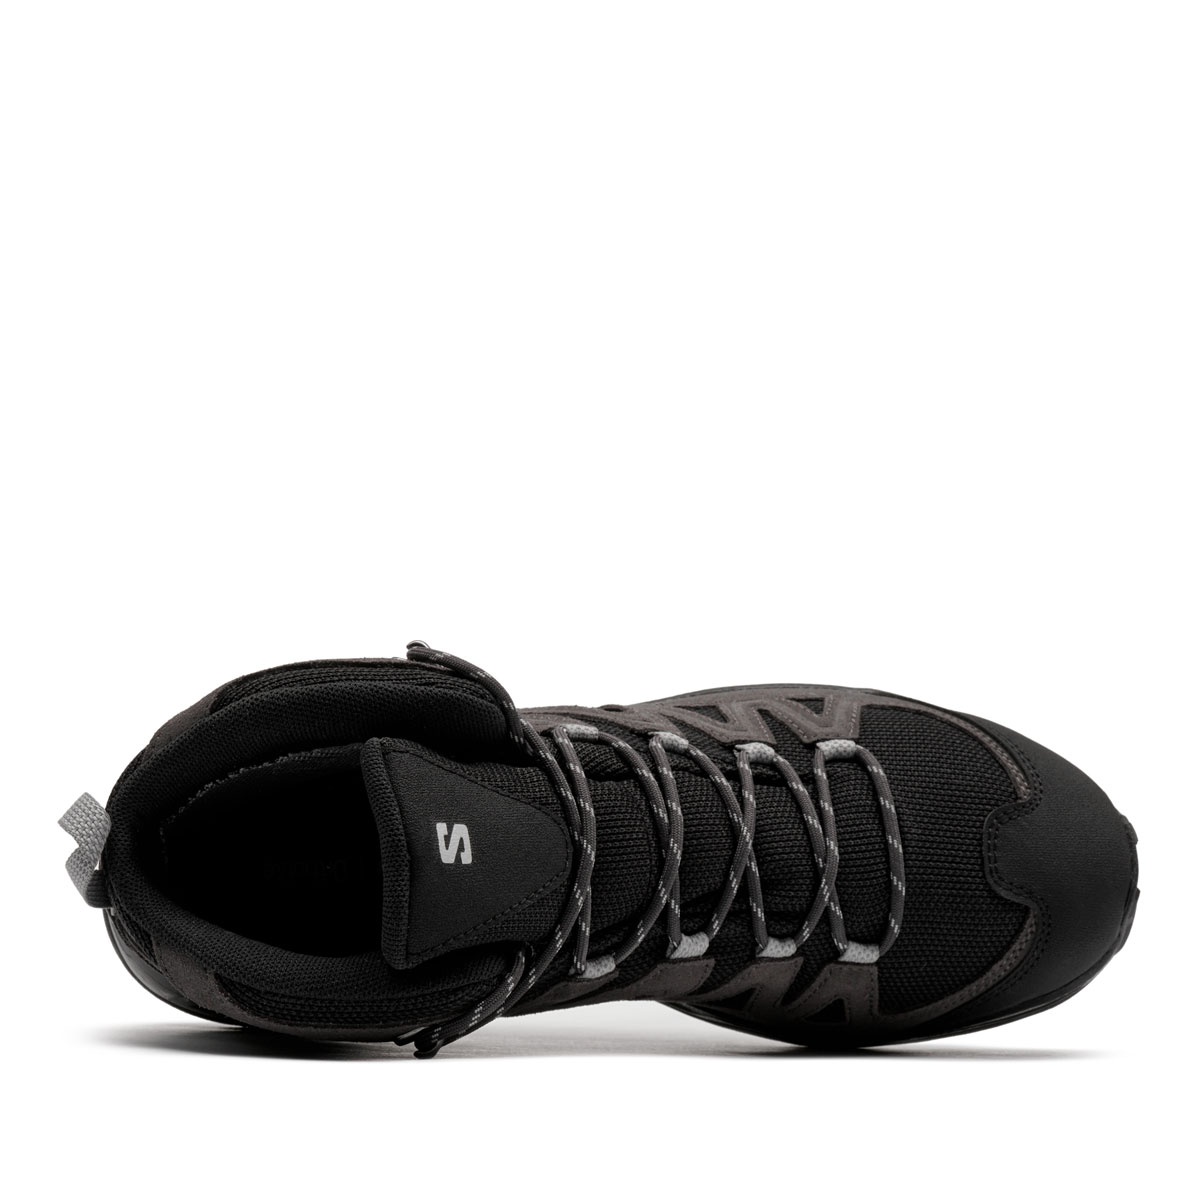 Salomon X Ward Leather Mid Gore-Tex Мъжки спортни обувки 471817